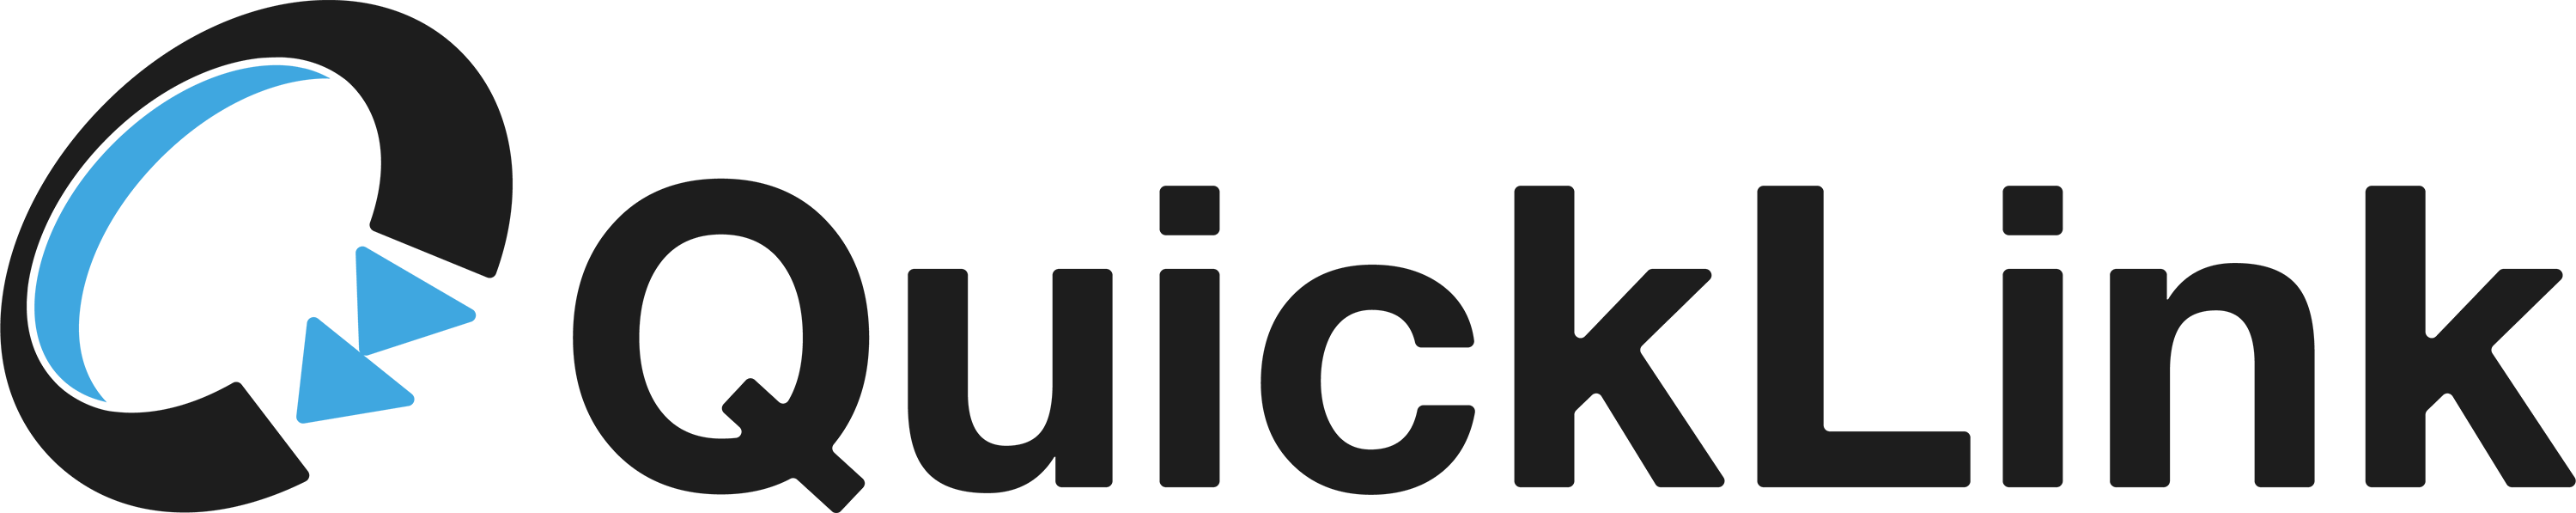 Quicklink Logo